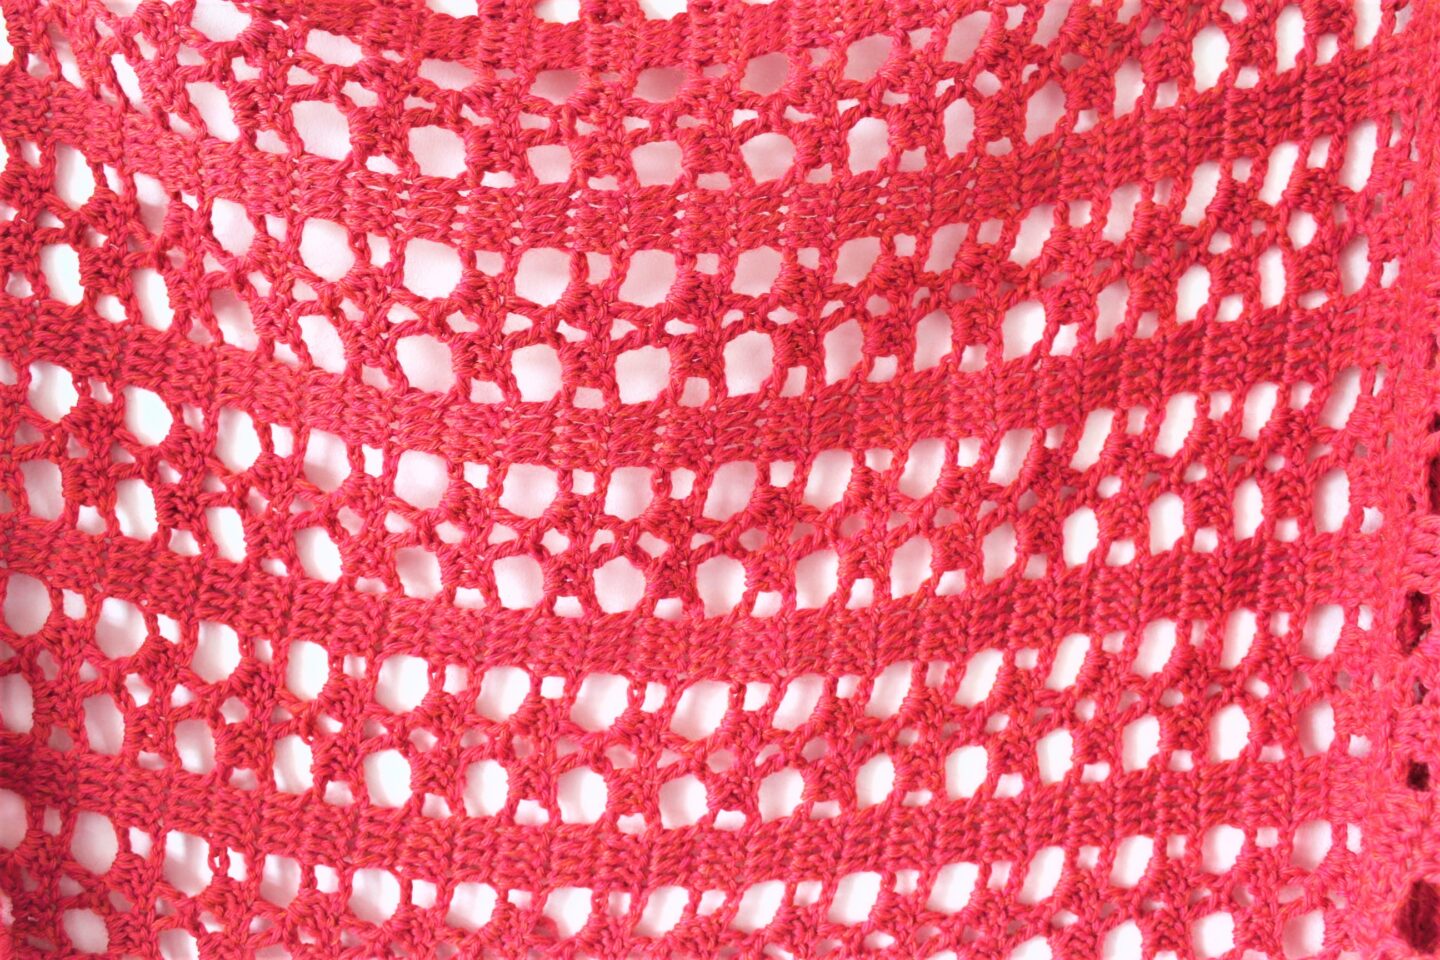 Lacy shawl close up.